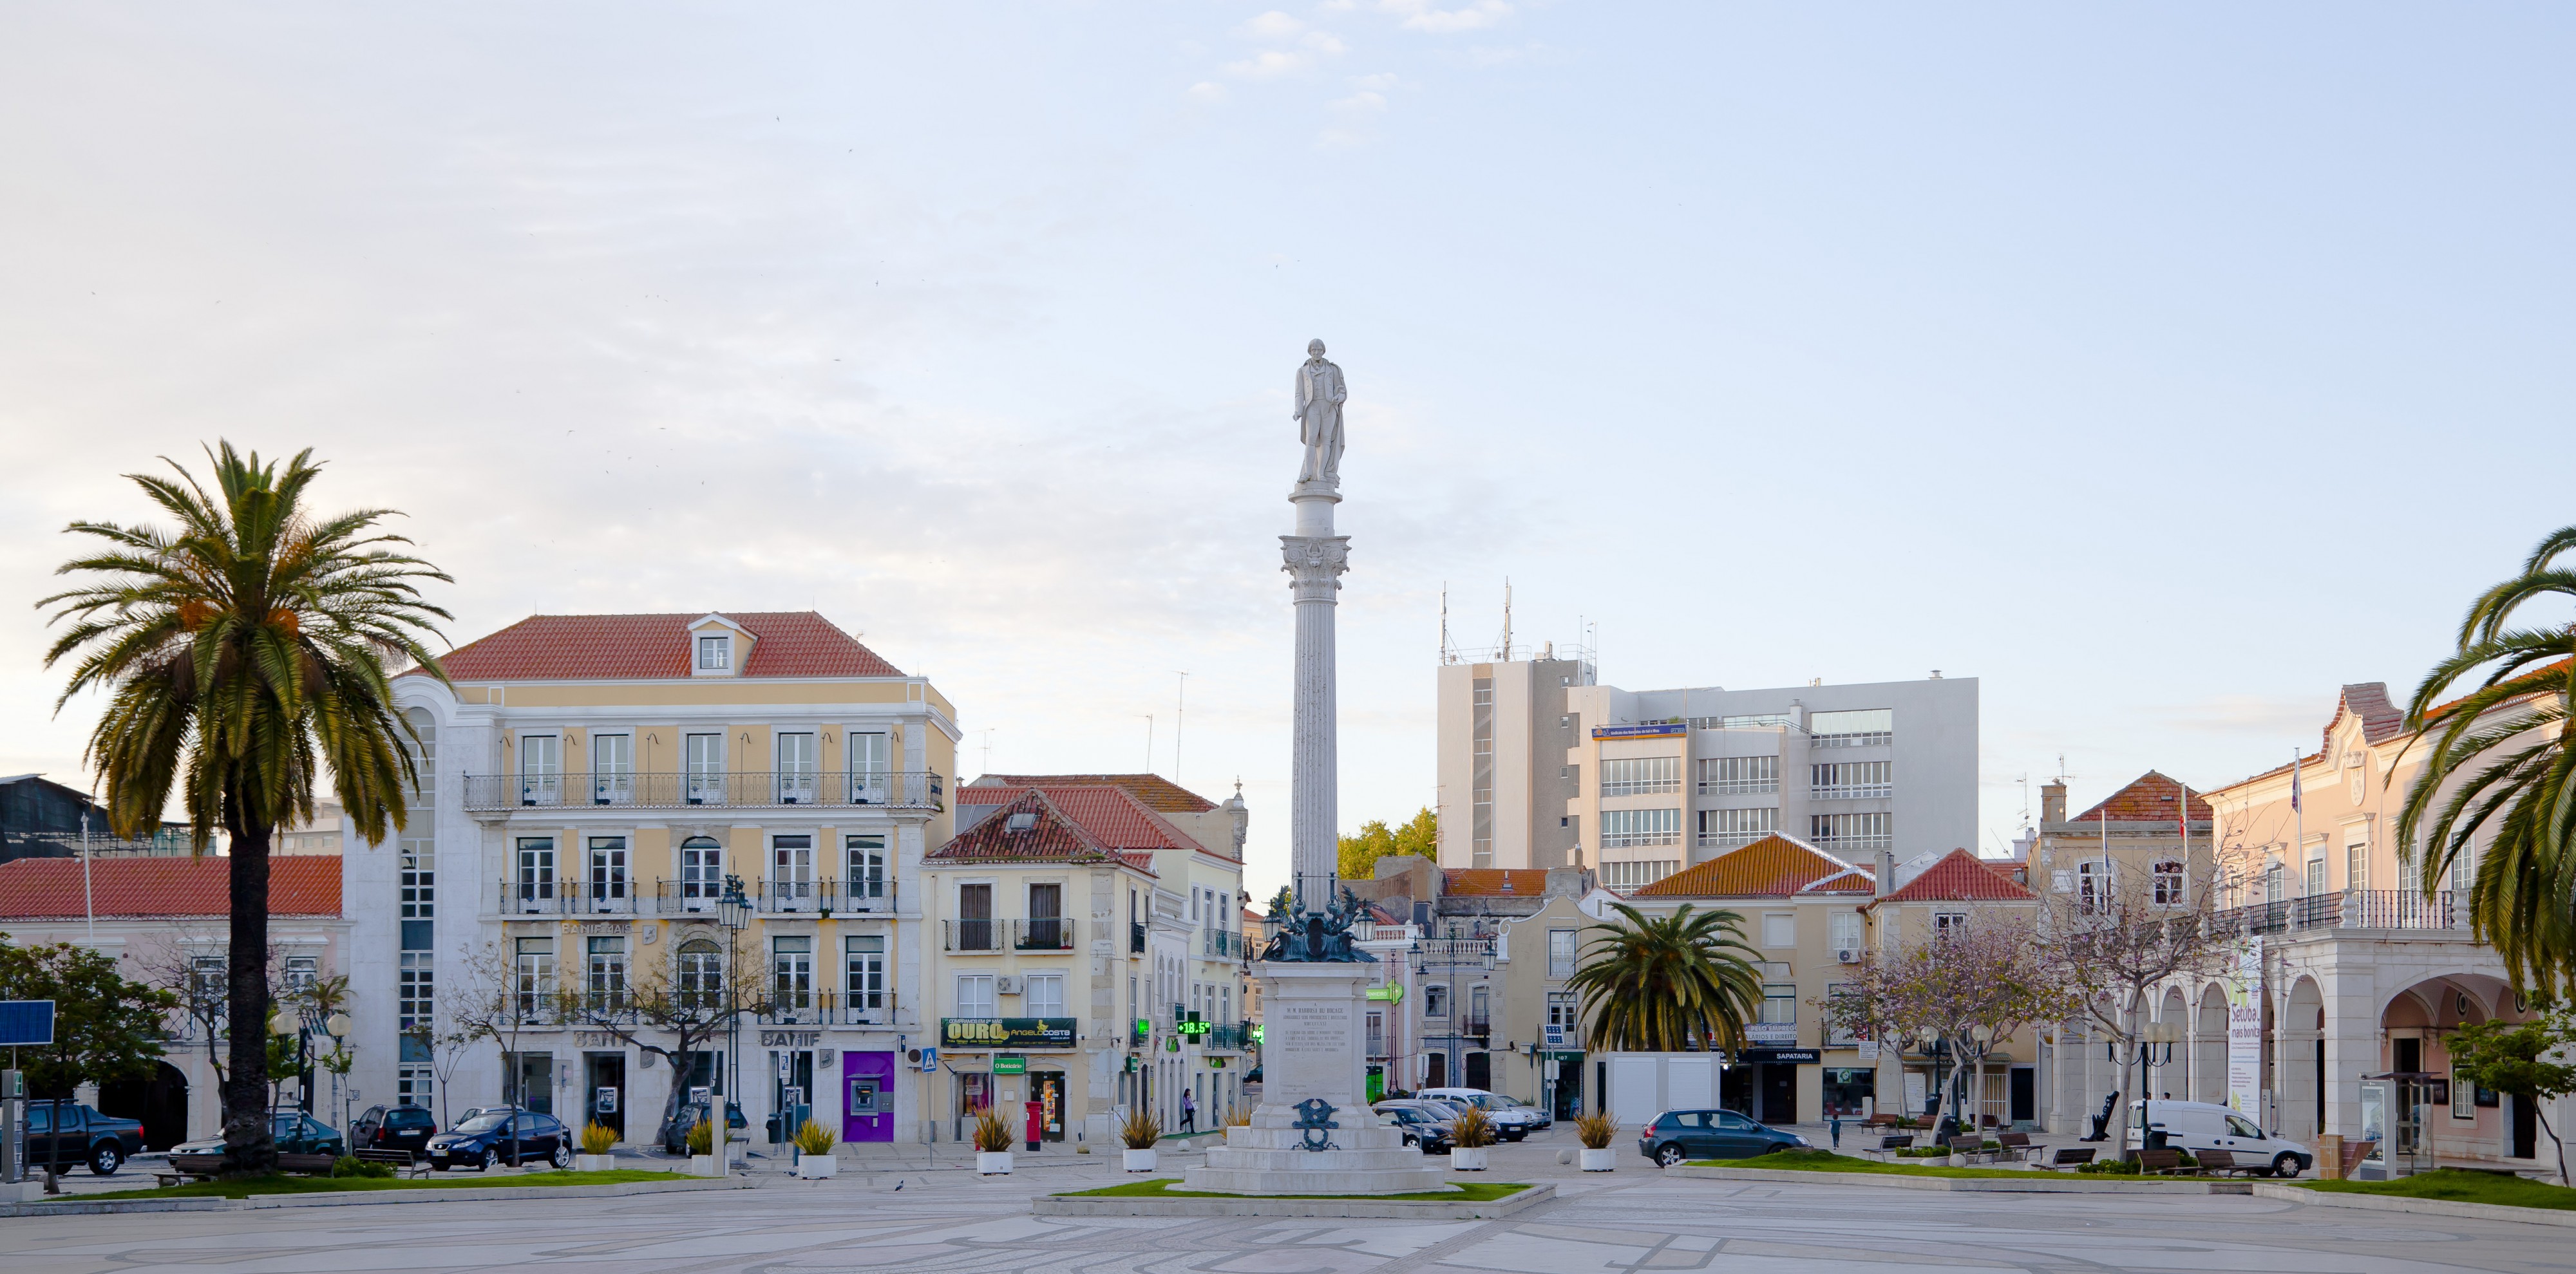 Plaza del ayuntamiento, Setúbal, Portugal, 2012-05-11, DD 03